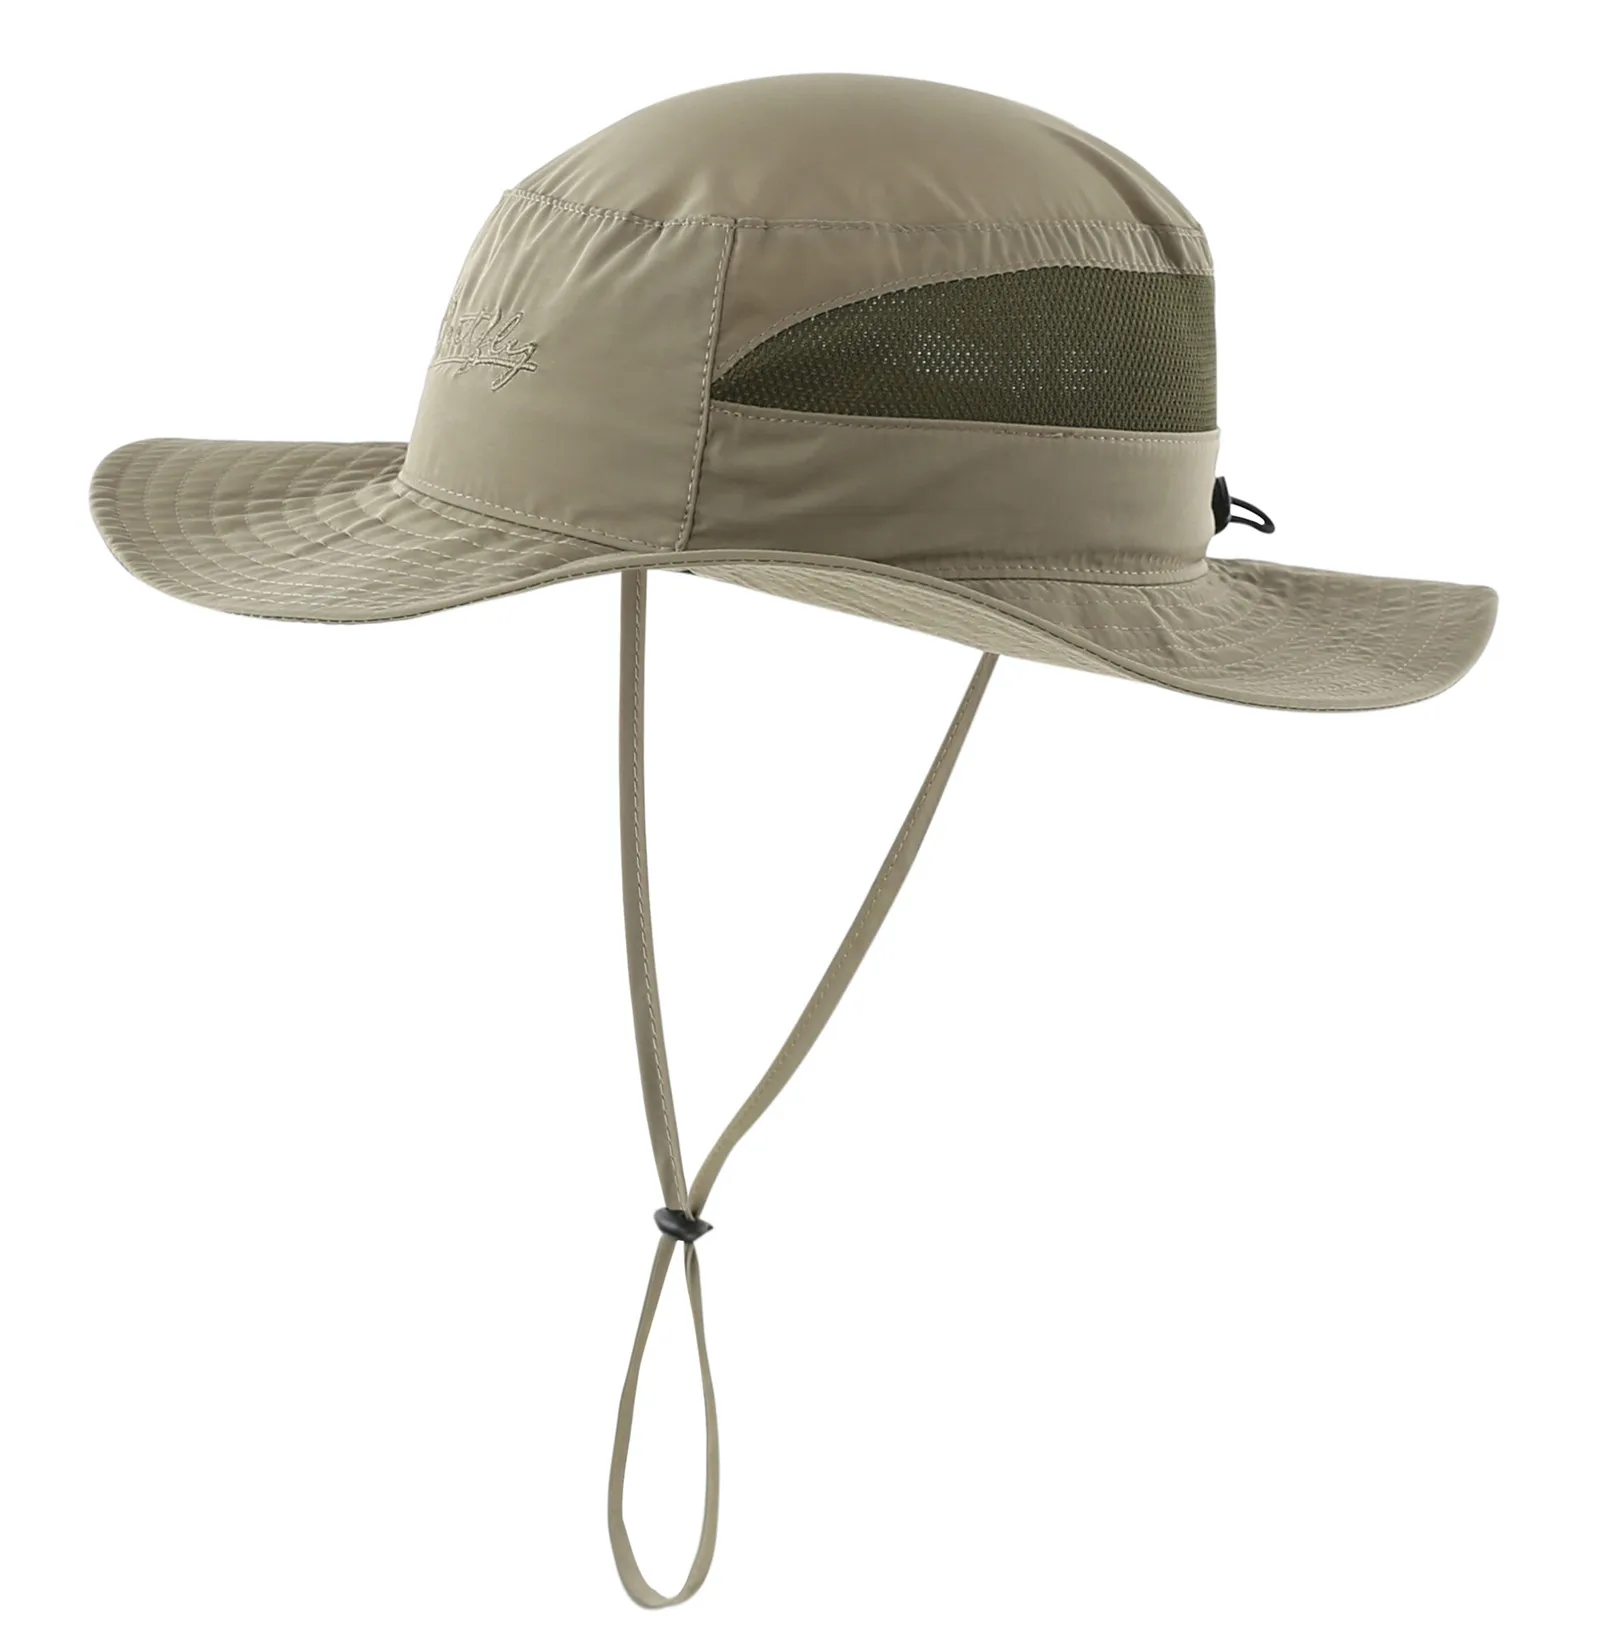 Connectyle Женская сетка Boonie Легкая летняя Солнцезащитная шляпа с широкими полями УФ-защита пляжная рыболовная шляпа - Цвет: Army Green